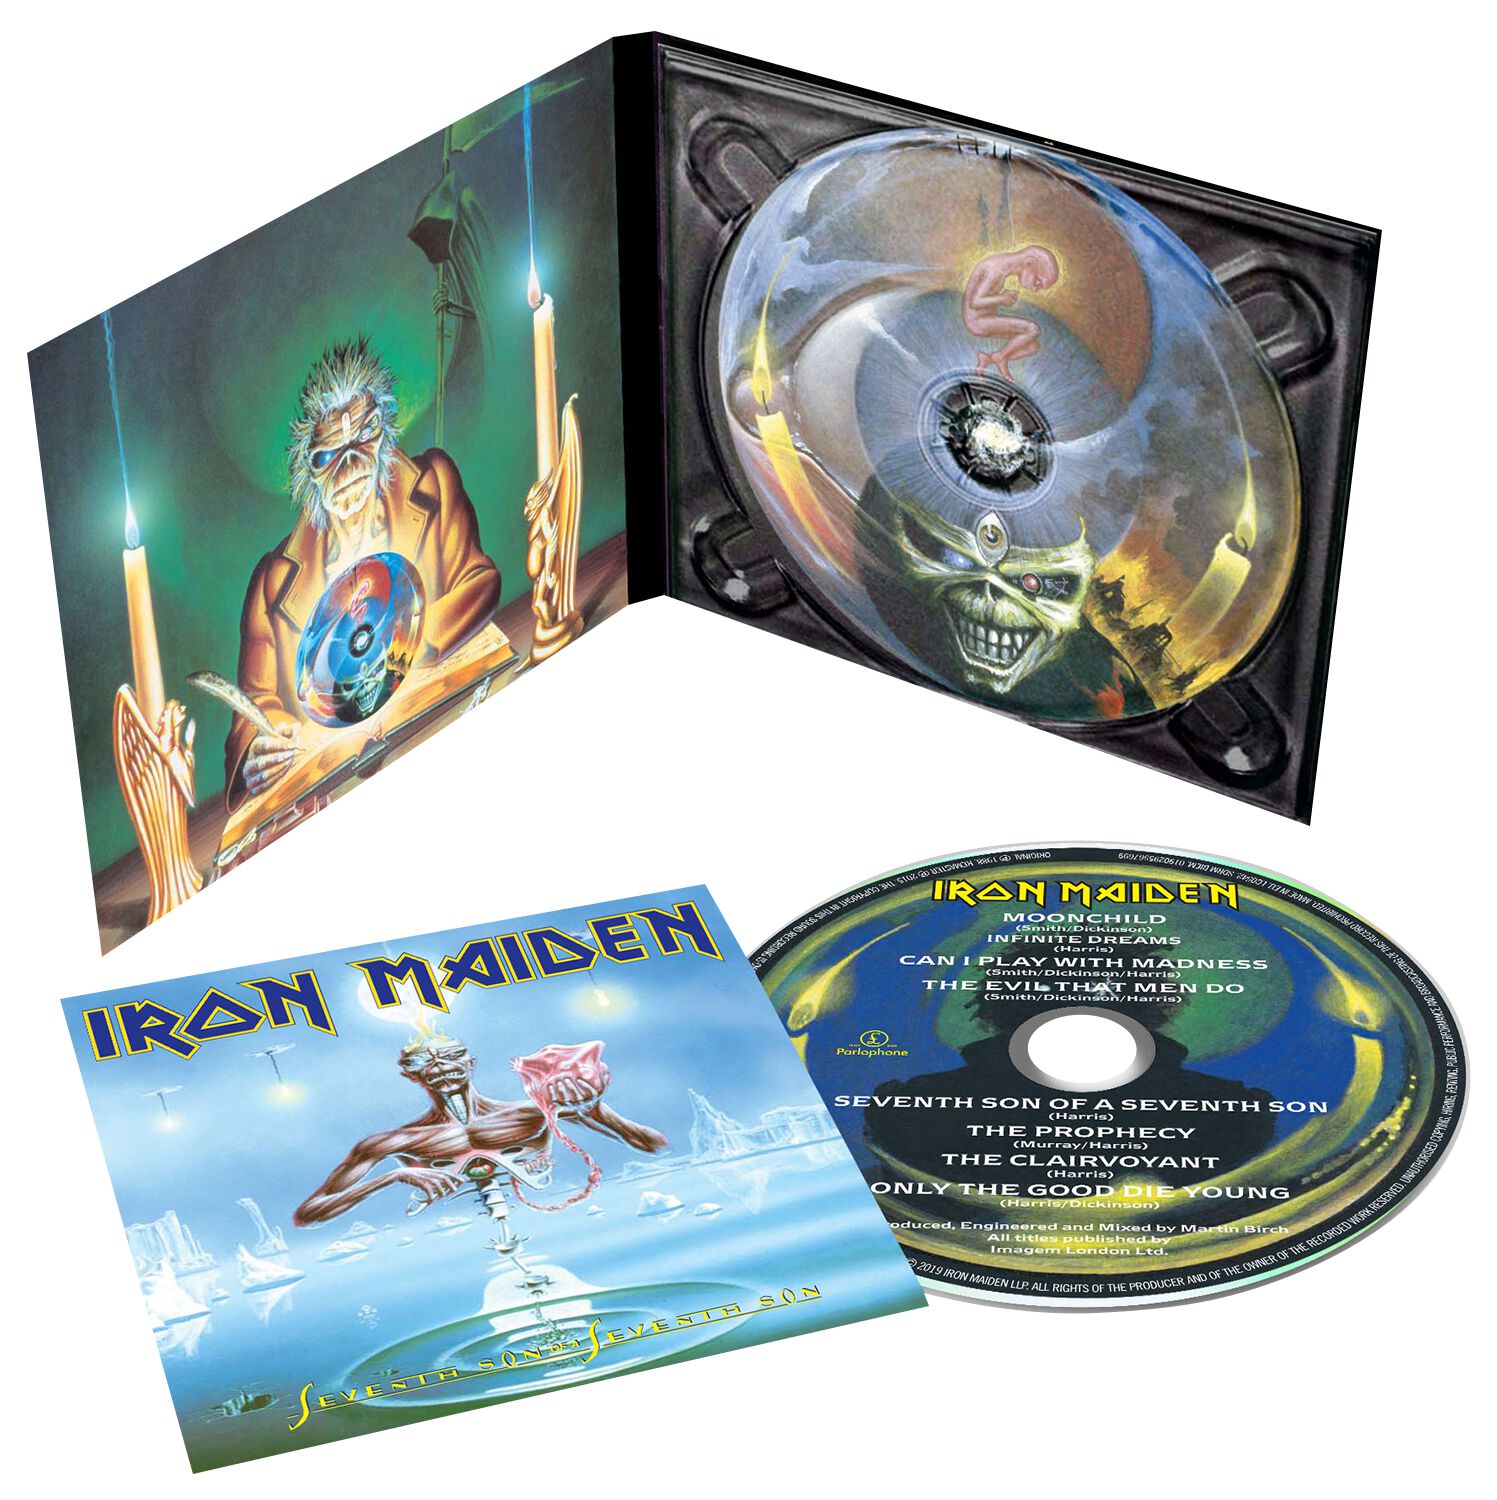 CD de Iron Maiden - Seventh son of a seventh son - para Standard product